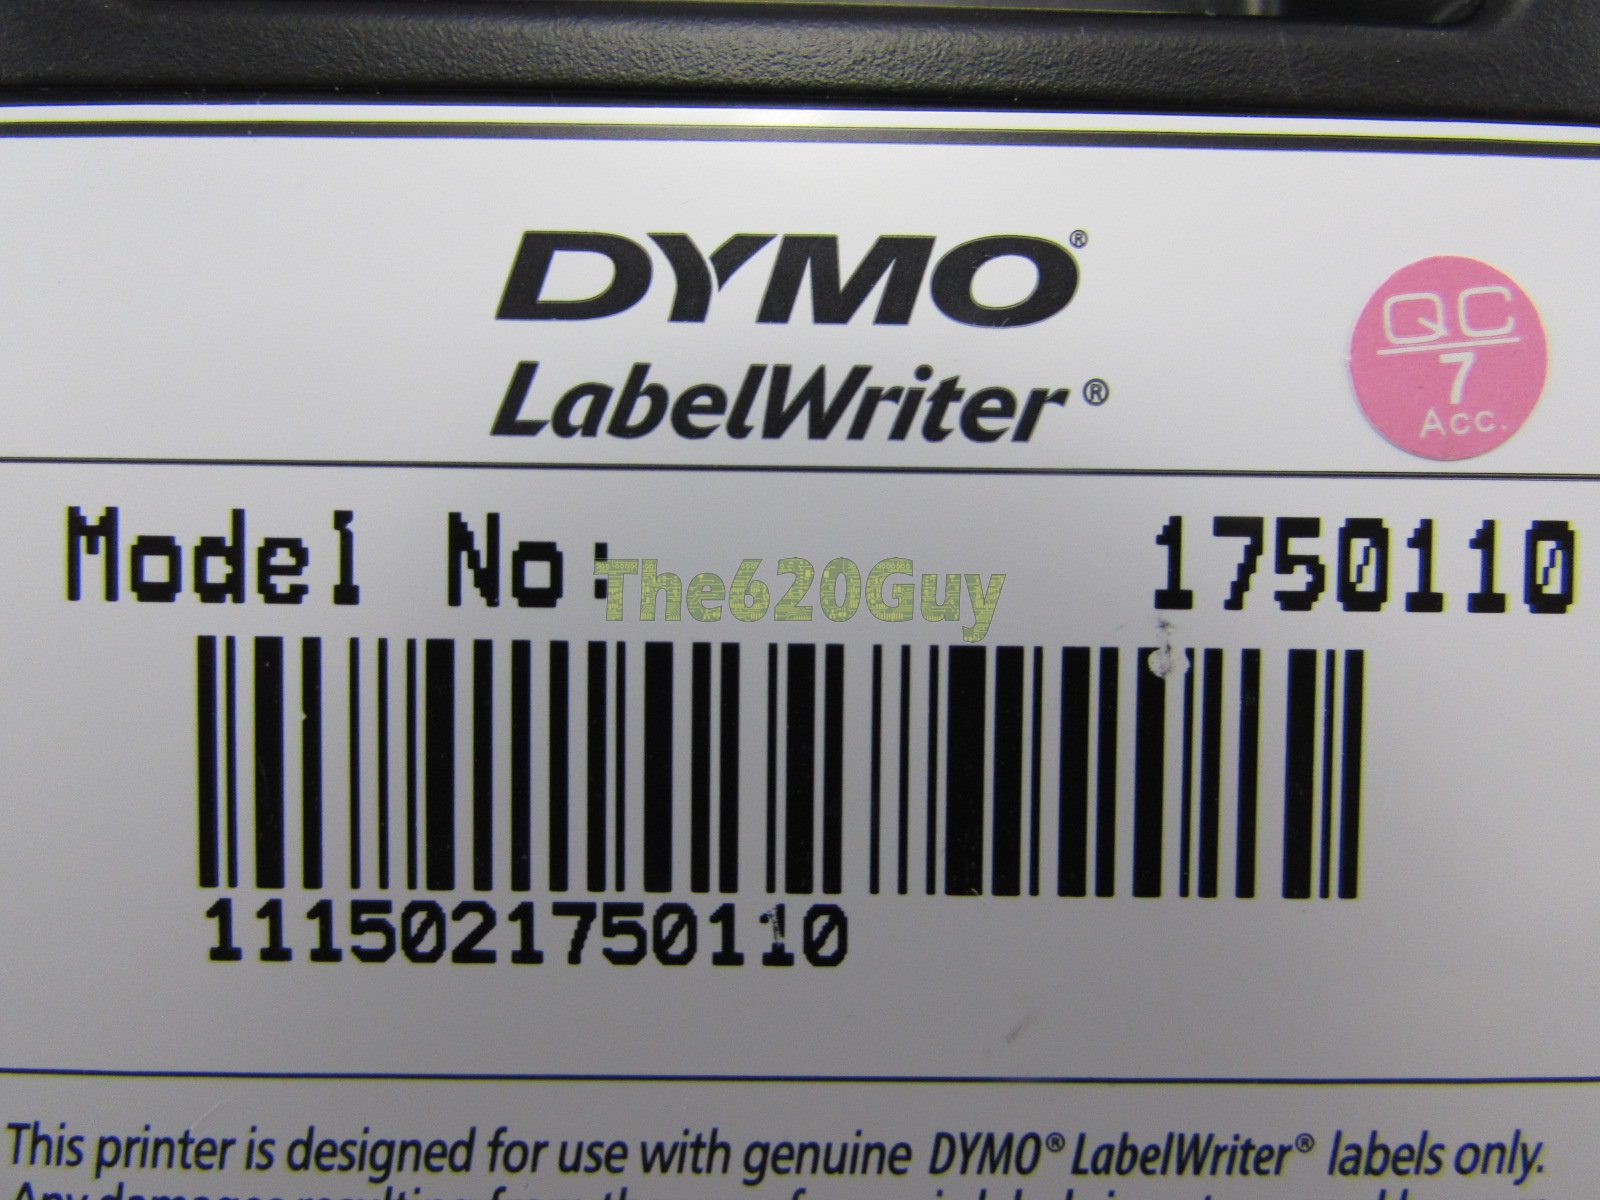 Dymo Labelwriter 450 Driver For Mac Yosmite